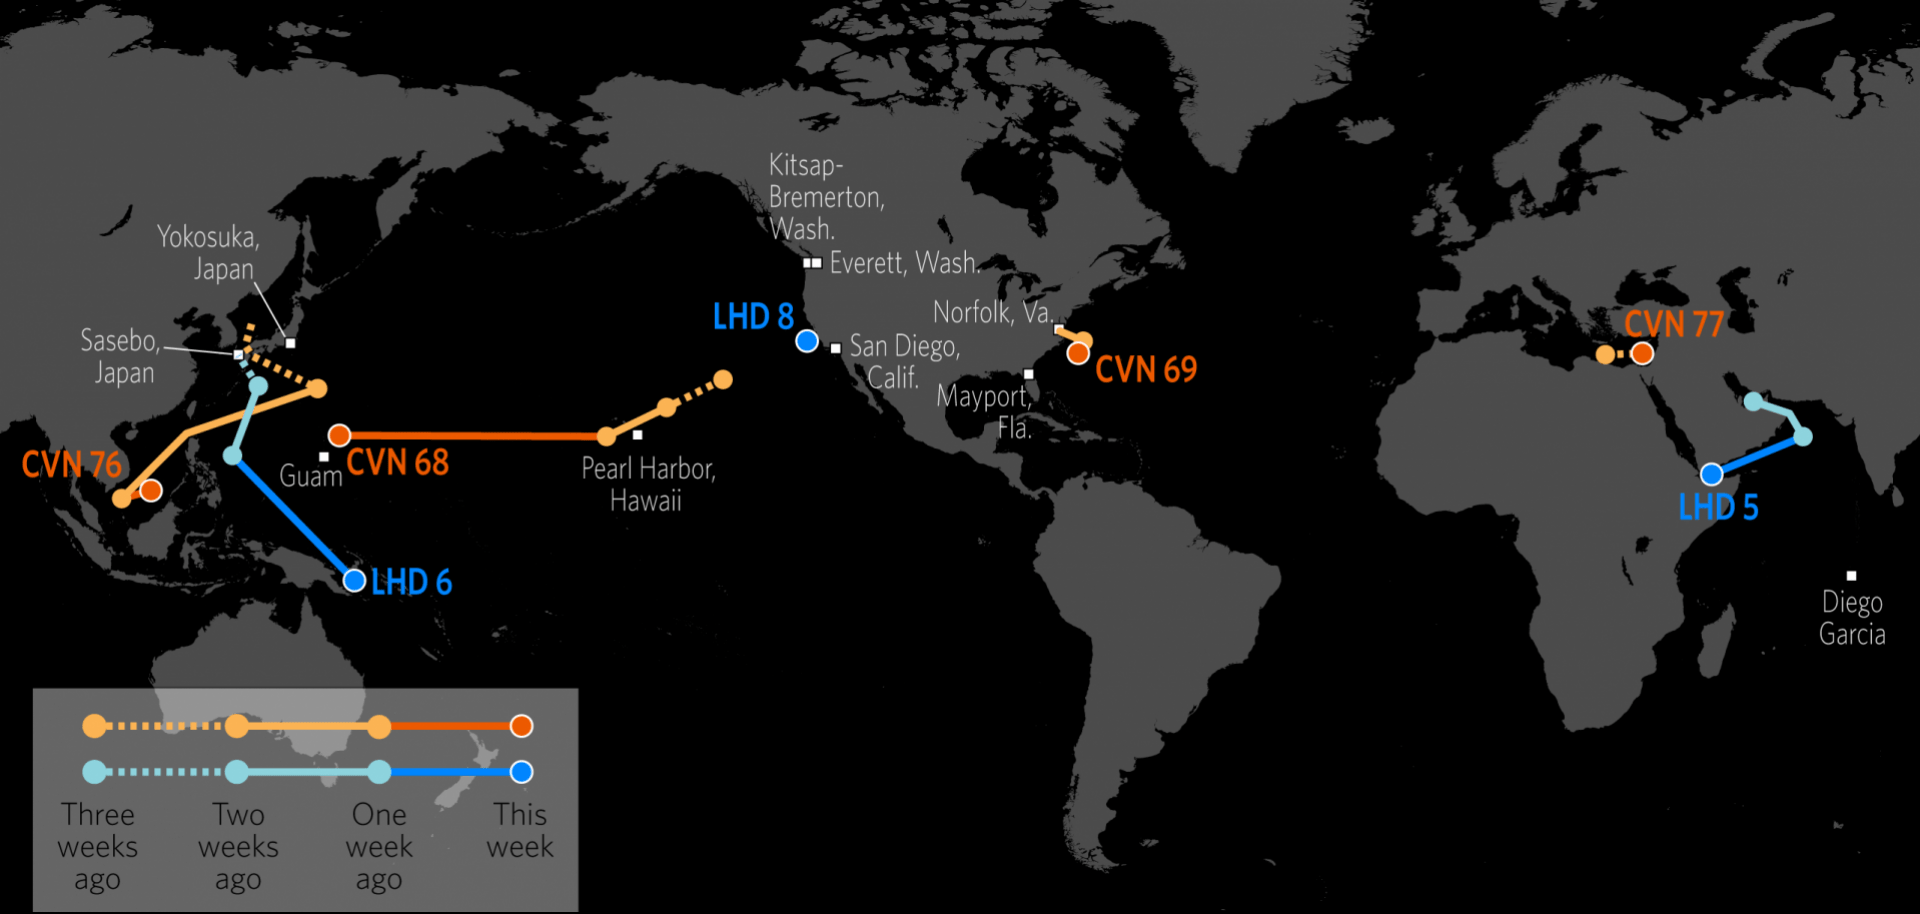 U.S. Naval Update Map for June 29, 2017